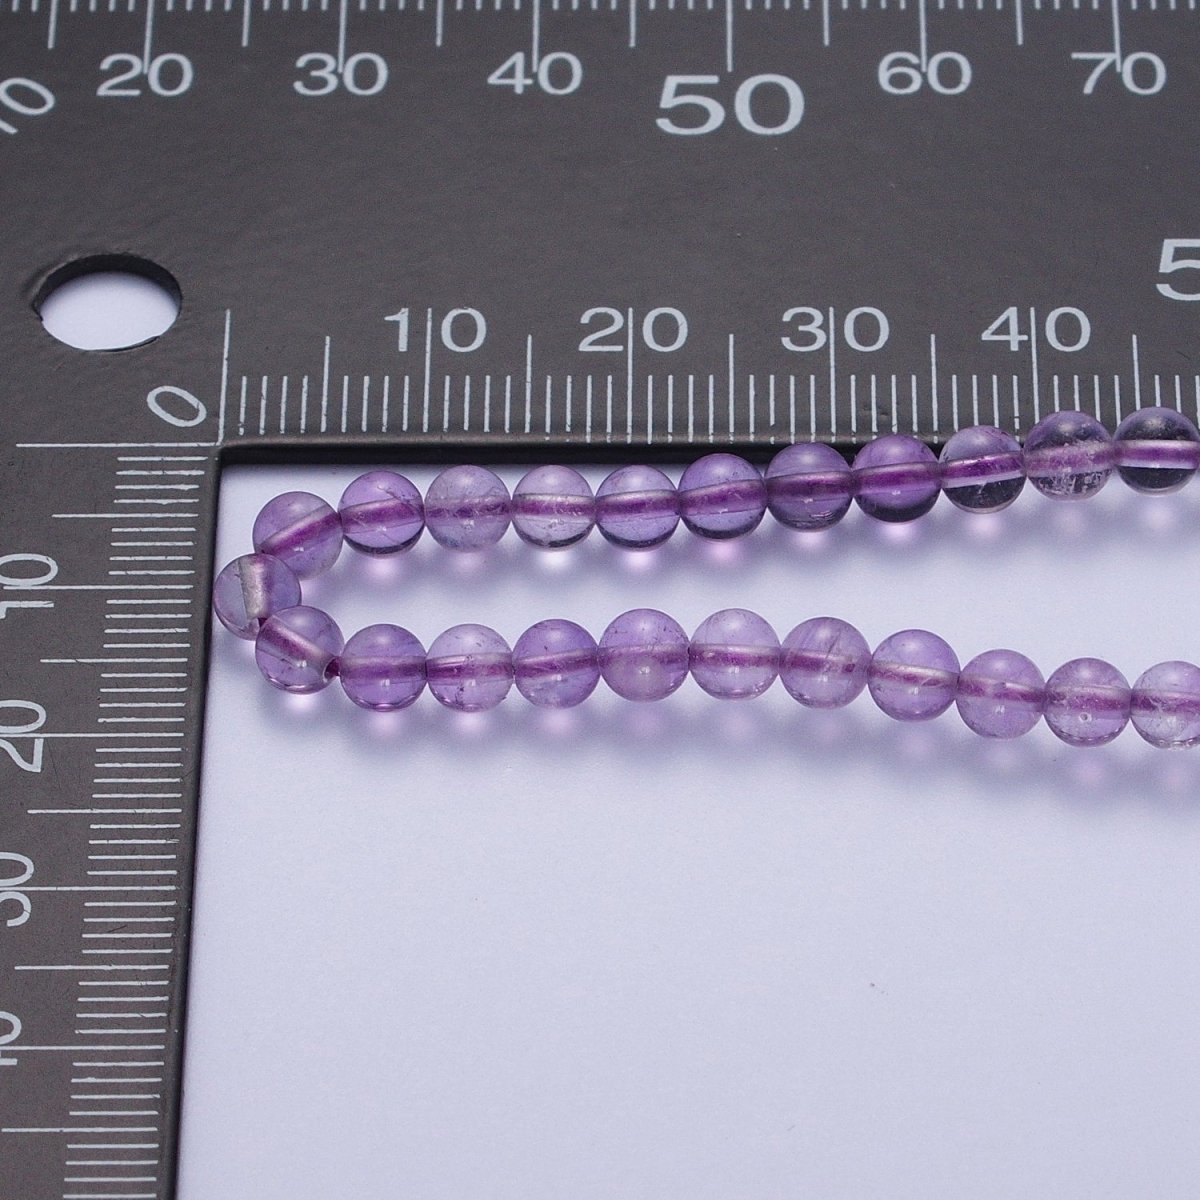 4mm Round Light / Dark Purple Amethyst Gemstone 16.5 Inch Choker Necklace | WA-1184 WA-1193 Clearance Pricing - DLUXCA